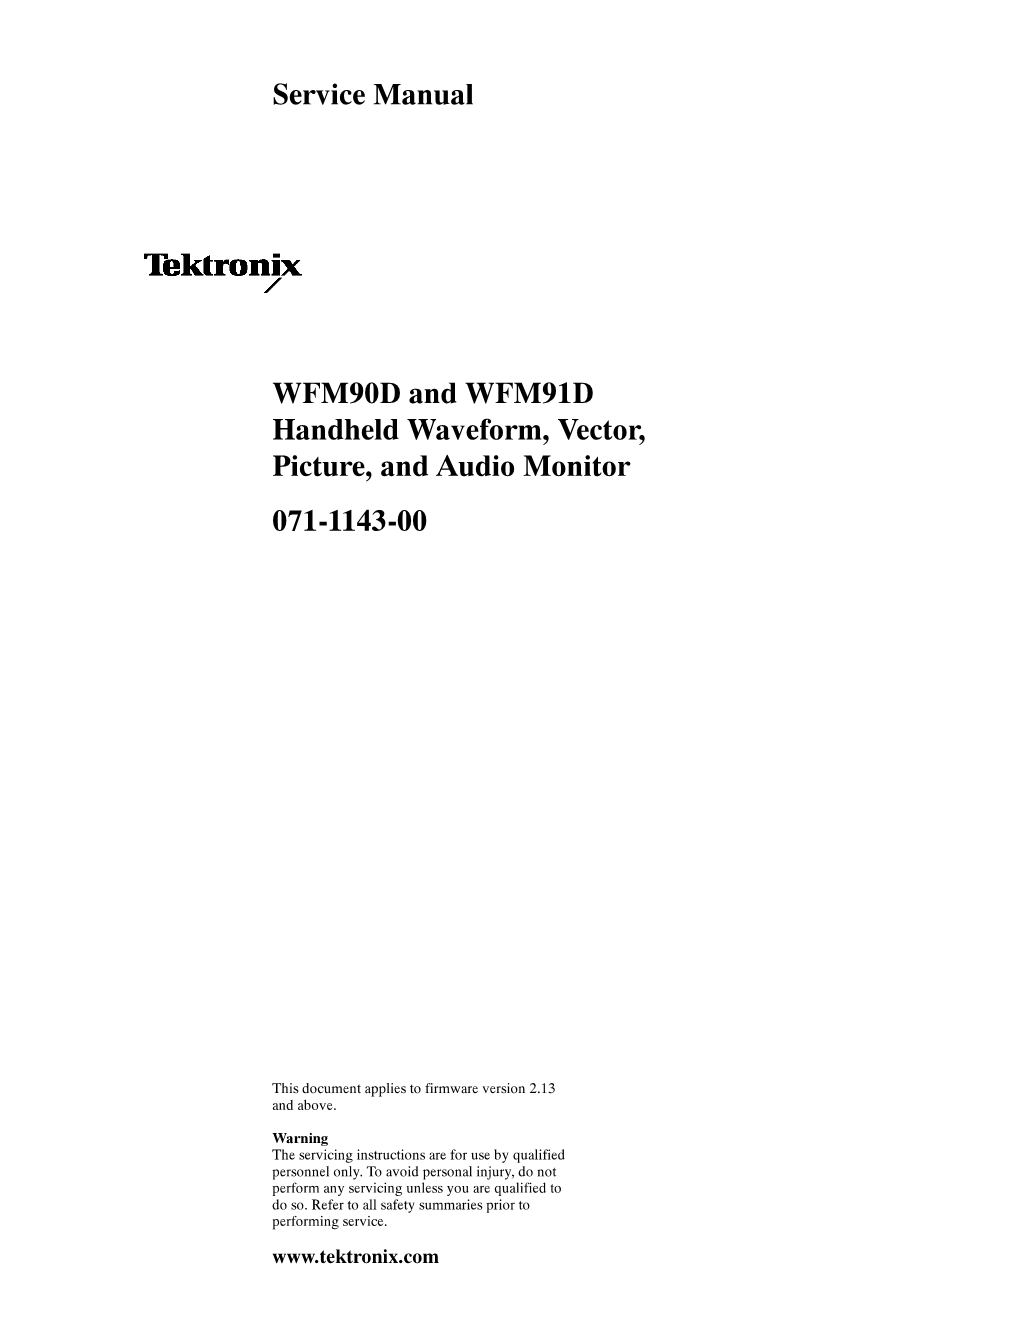 Service Manual WFM90D and WFM91D Handheld Waveform